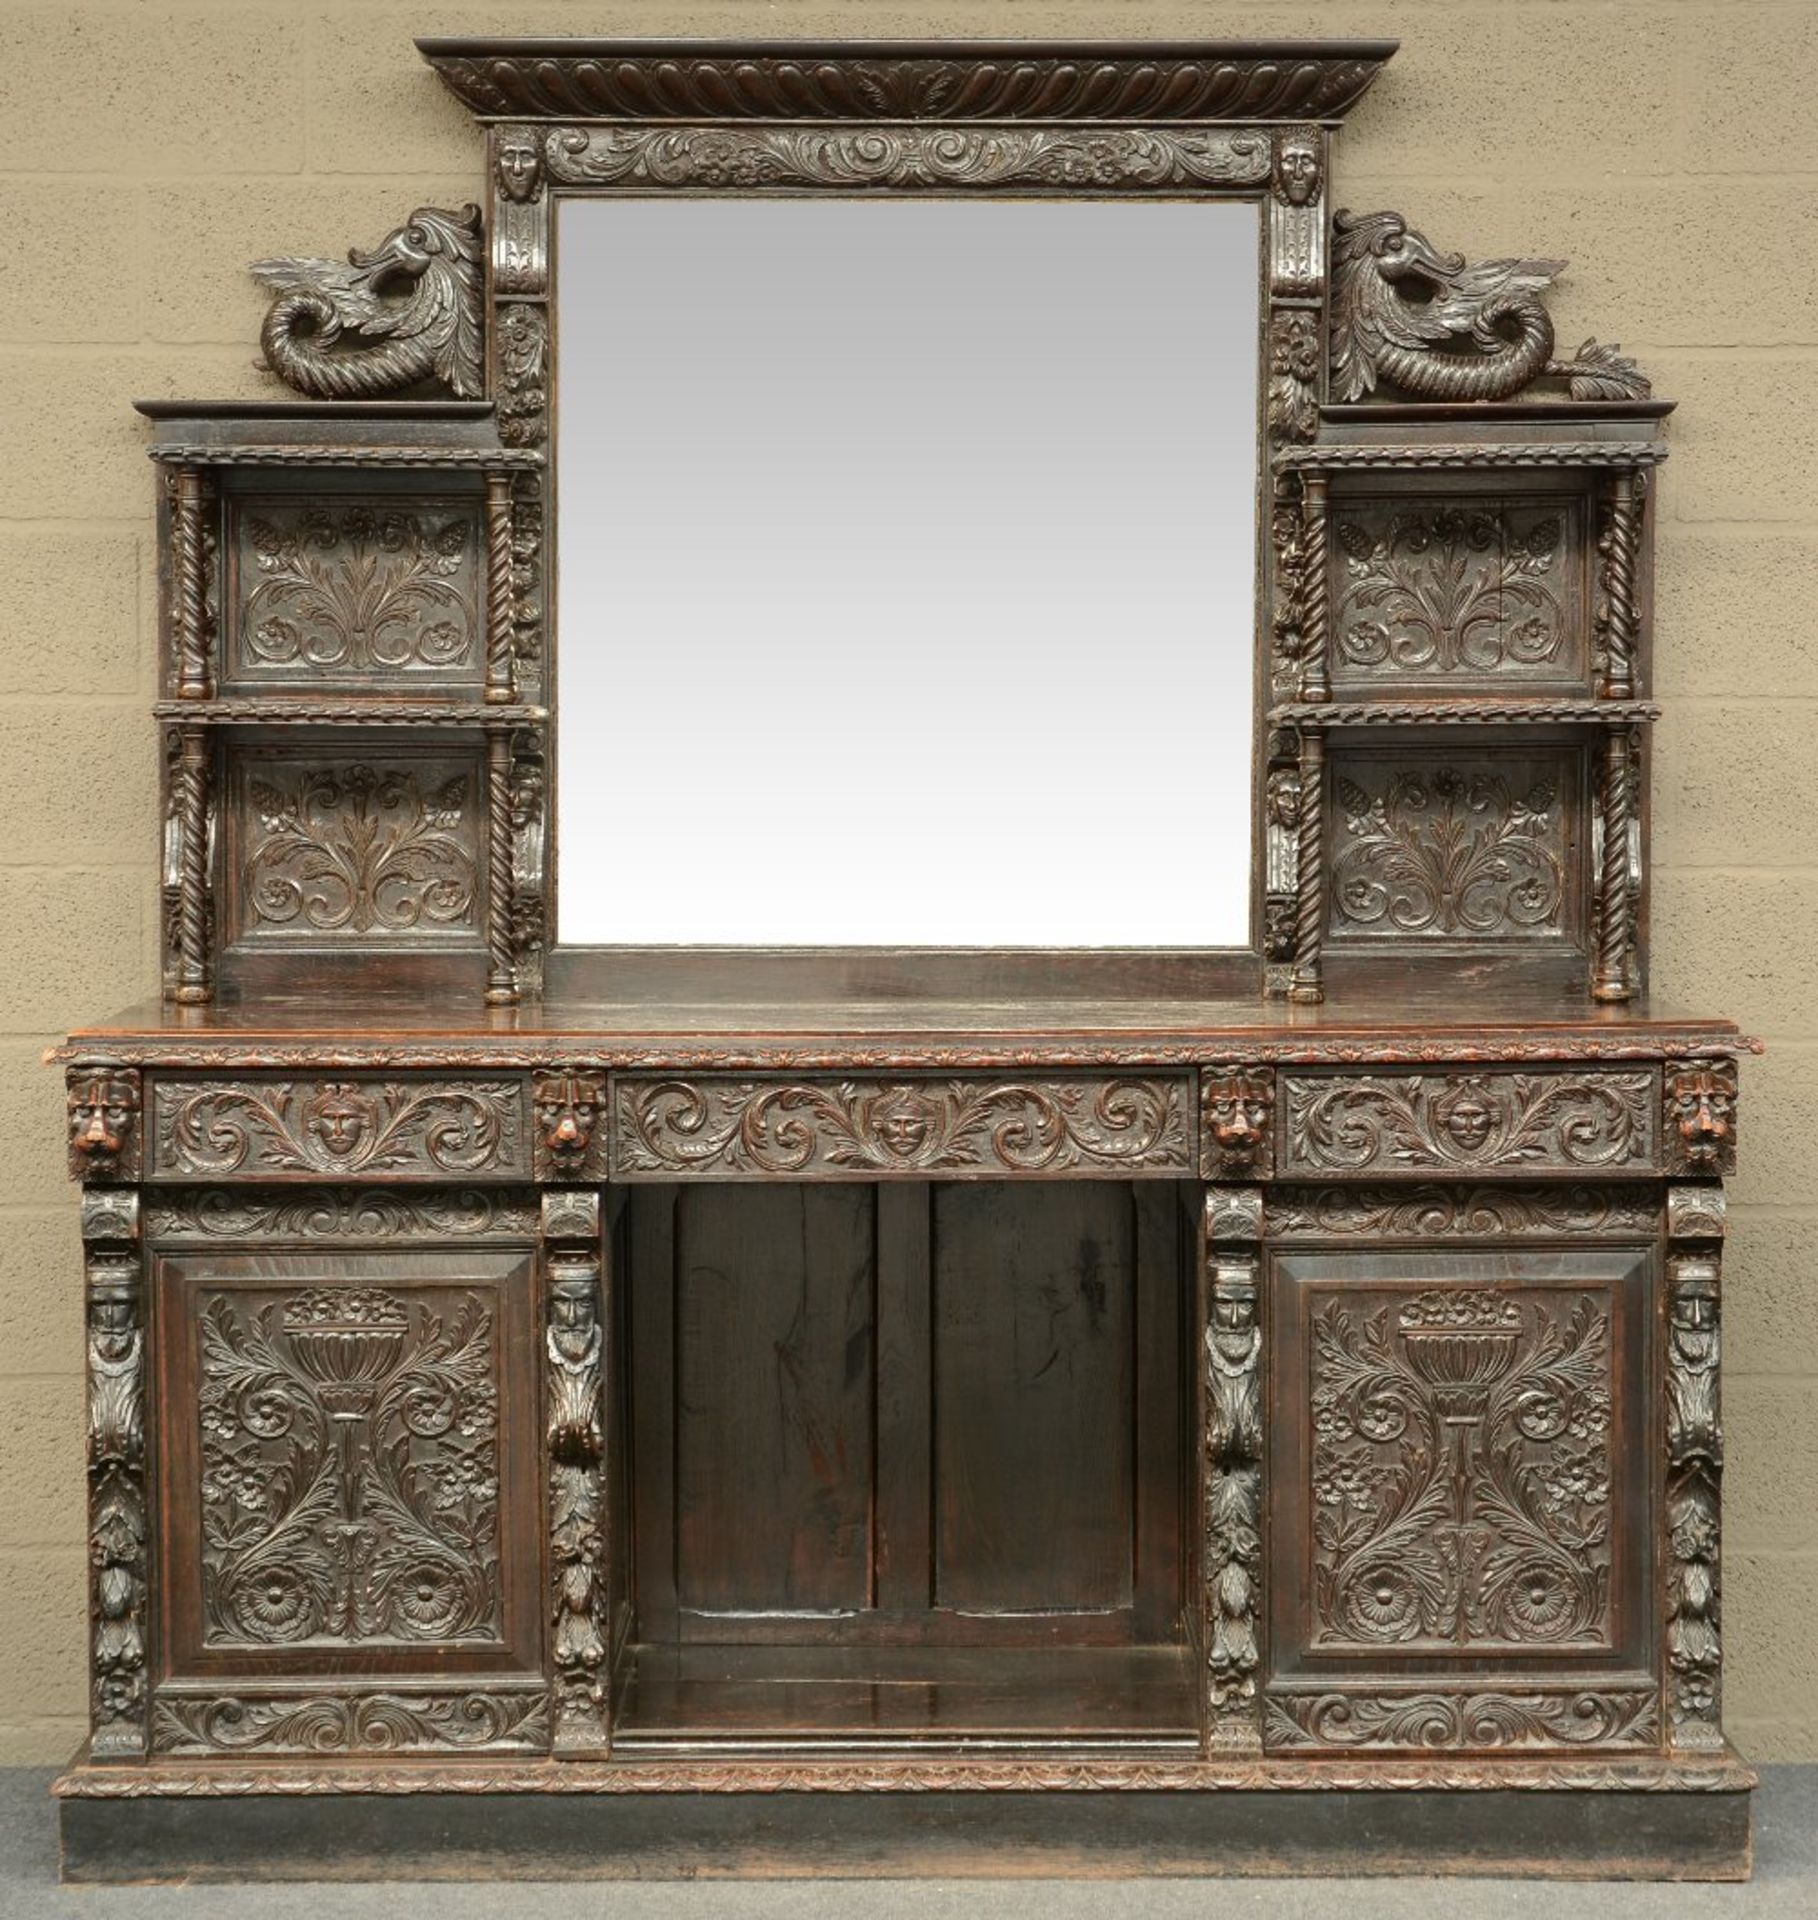 A richly carved oak late Victorian renaissance revival cupboard, H 200 - W 181,5 - D 66,5 cm